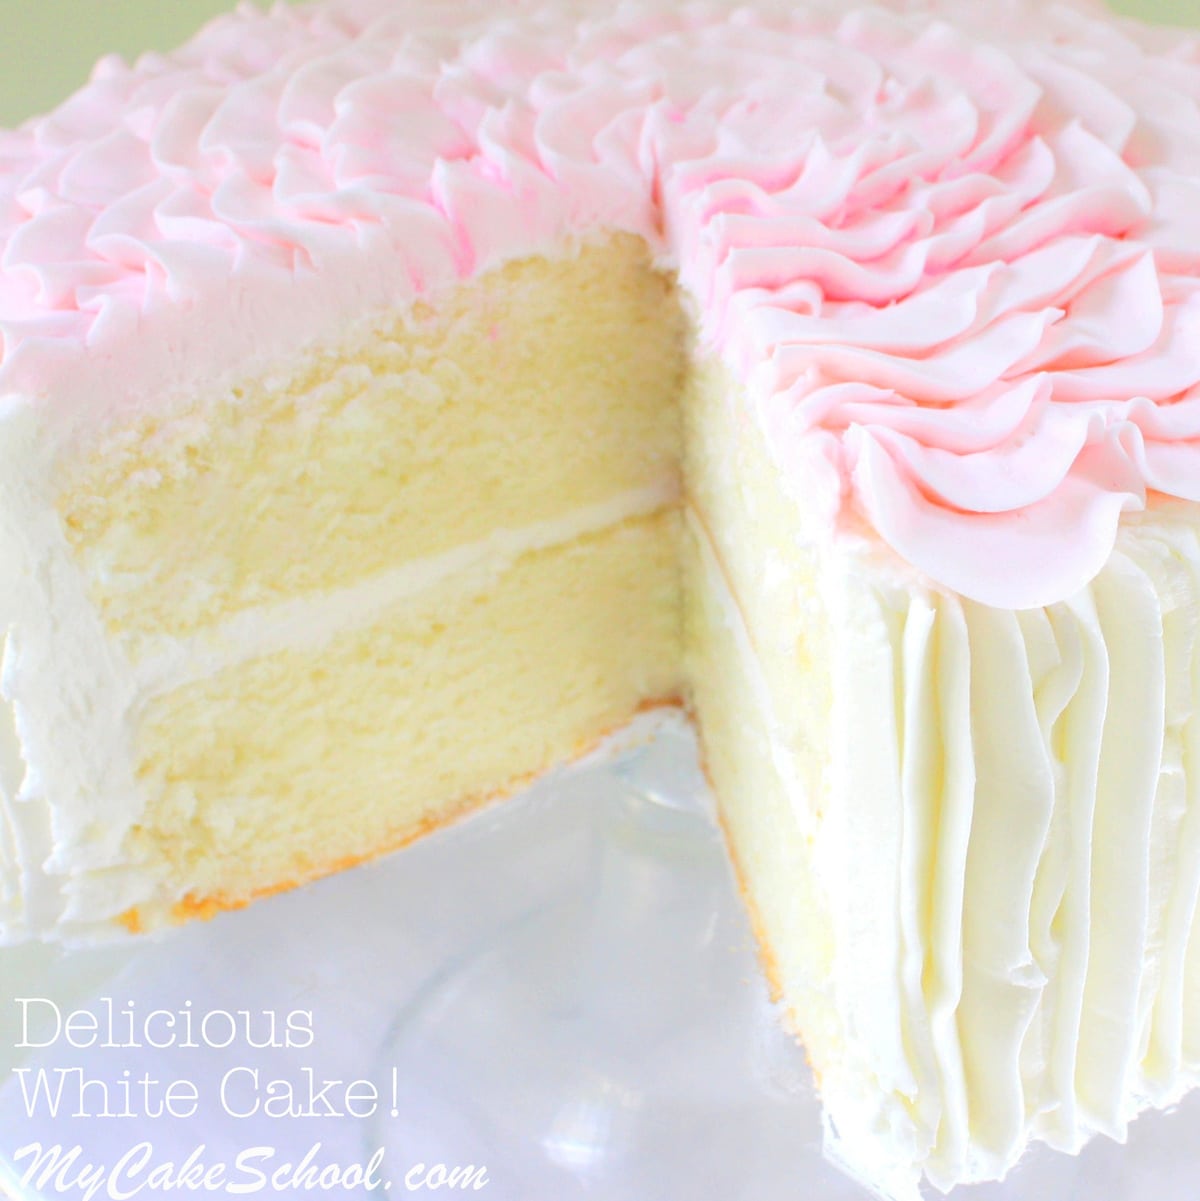 Delicious White Cake from Scratch! Recipe by MyCakeSchool.com.